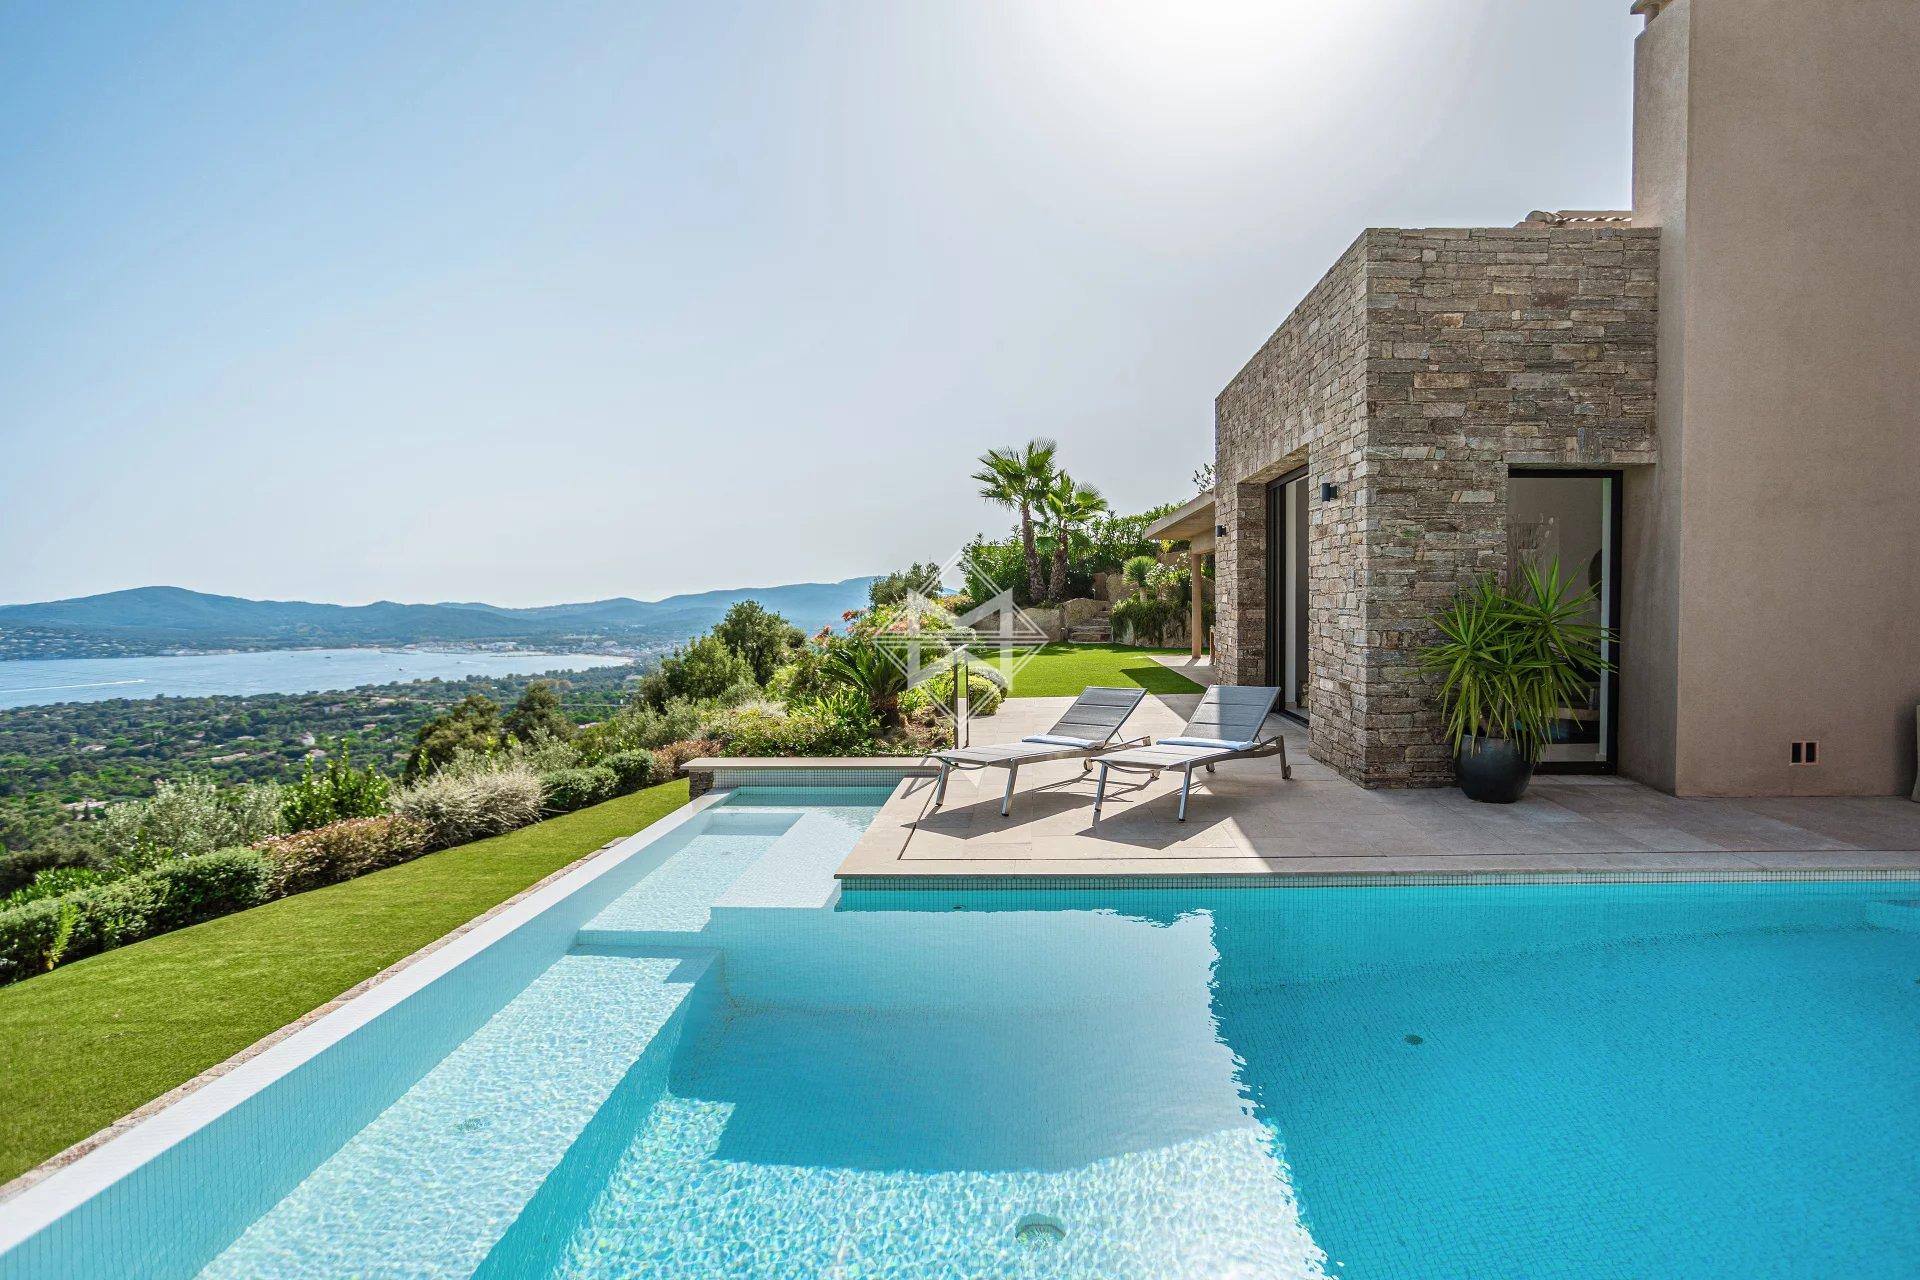 Sale Villa Grimaud - 4 Bedrooms - Sea view - Panoramic sea view . Ref 8871